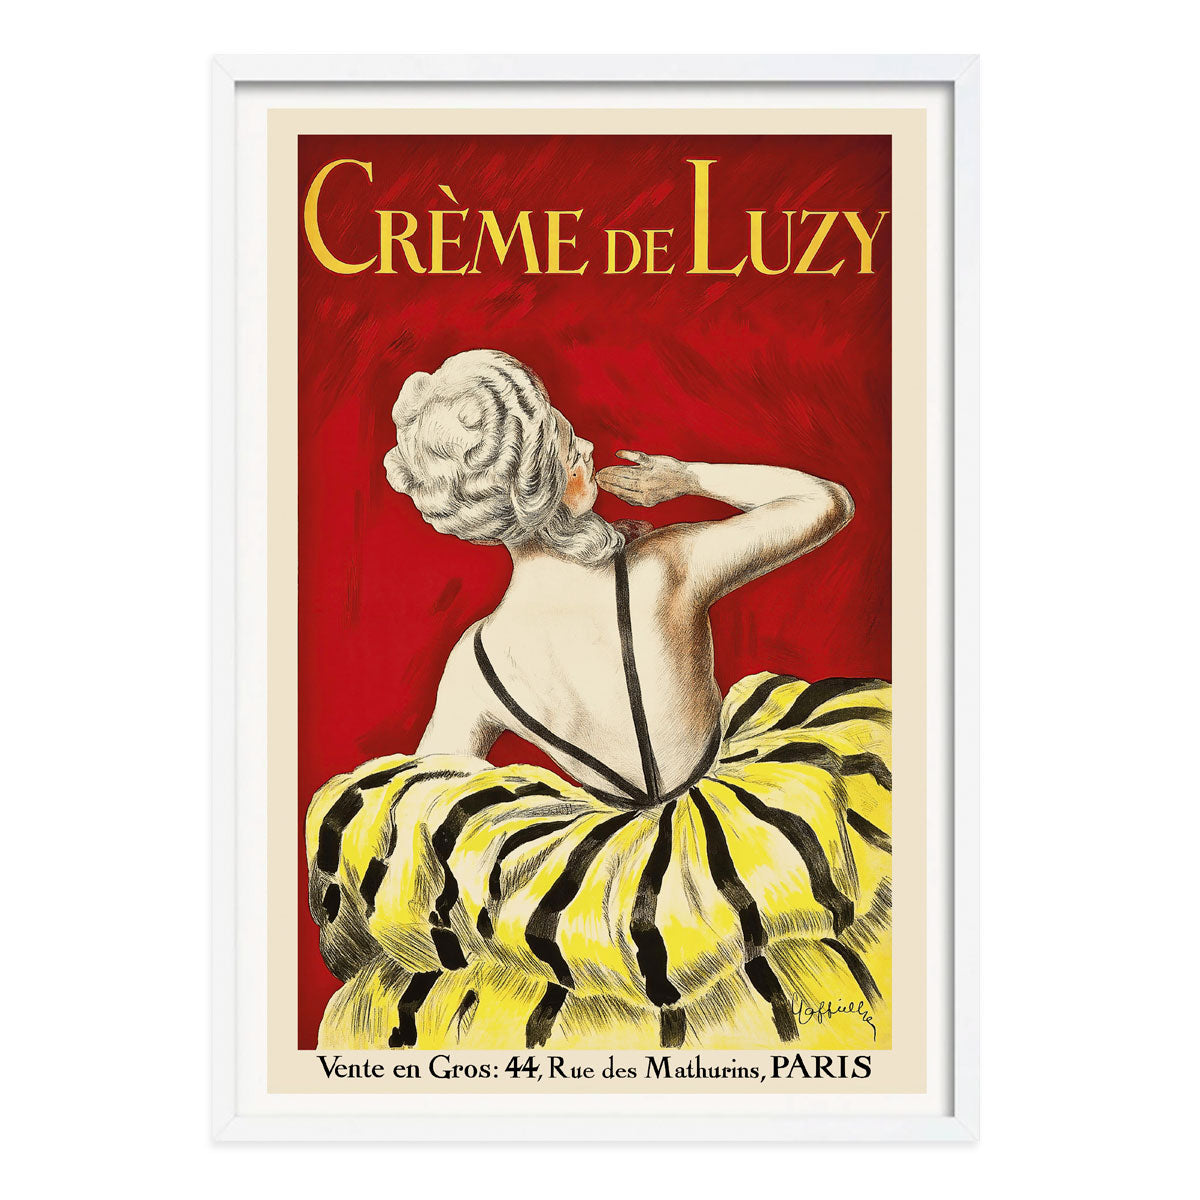 Creme de Luzy Paris vintage retro poster print in white frame from Places We Luv